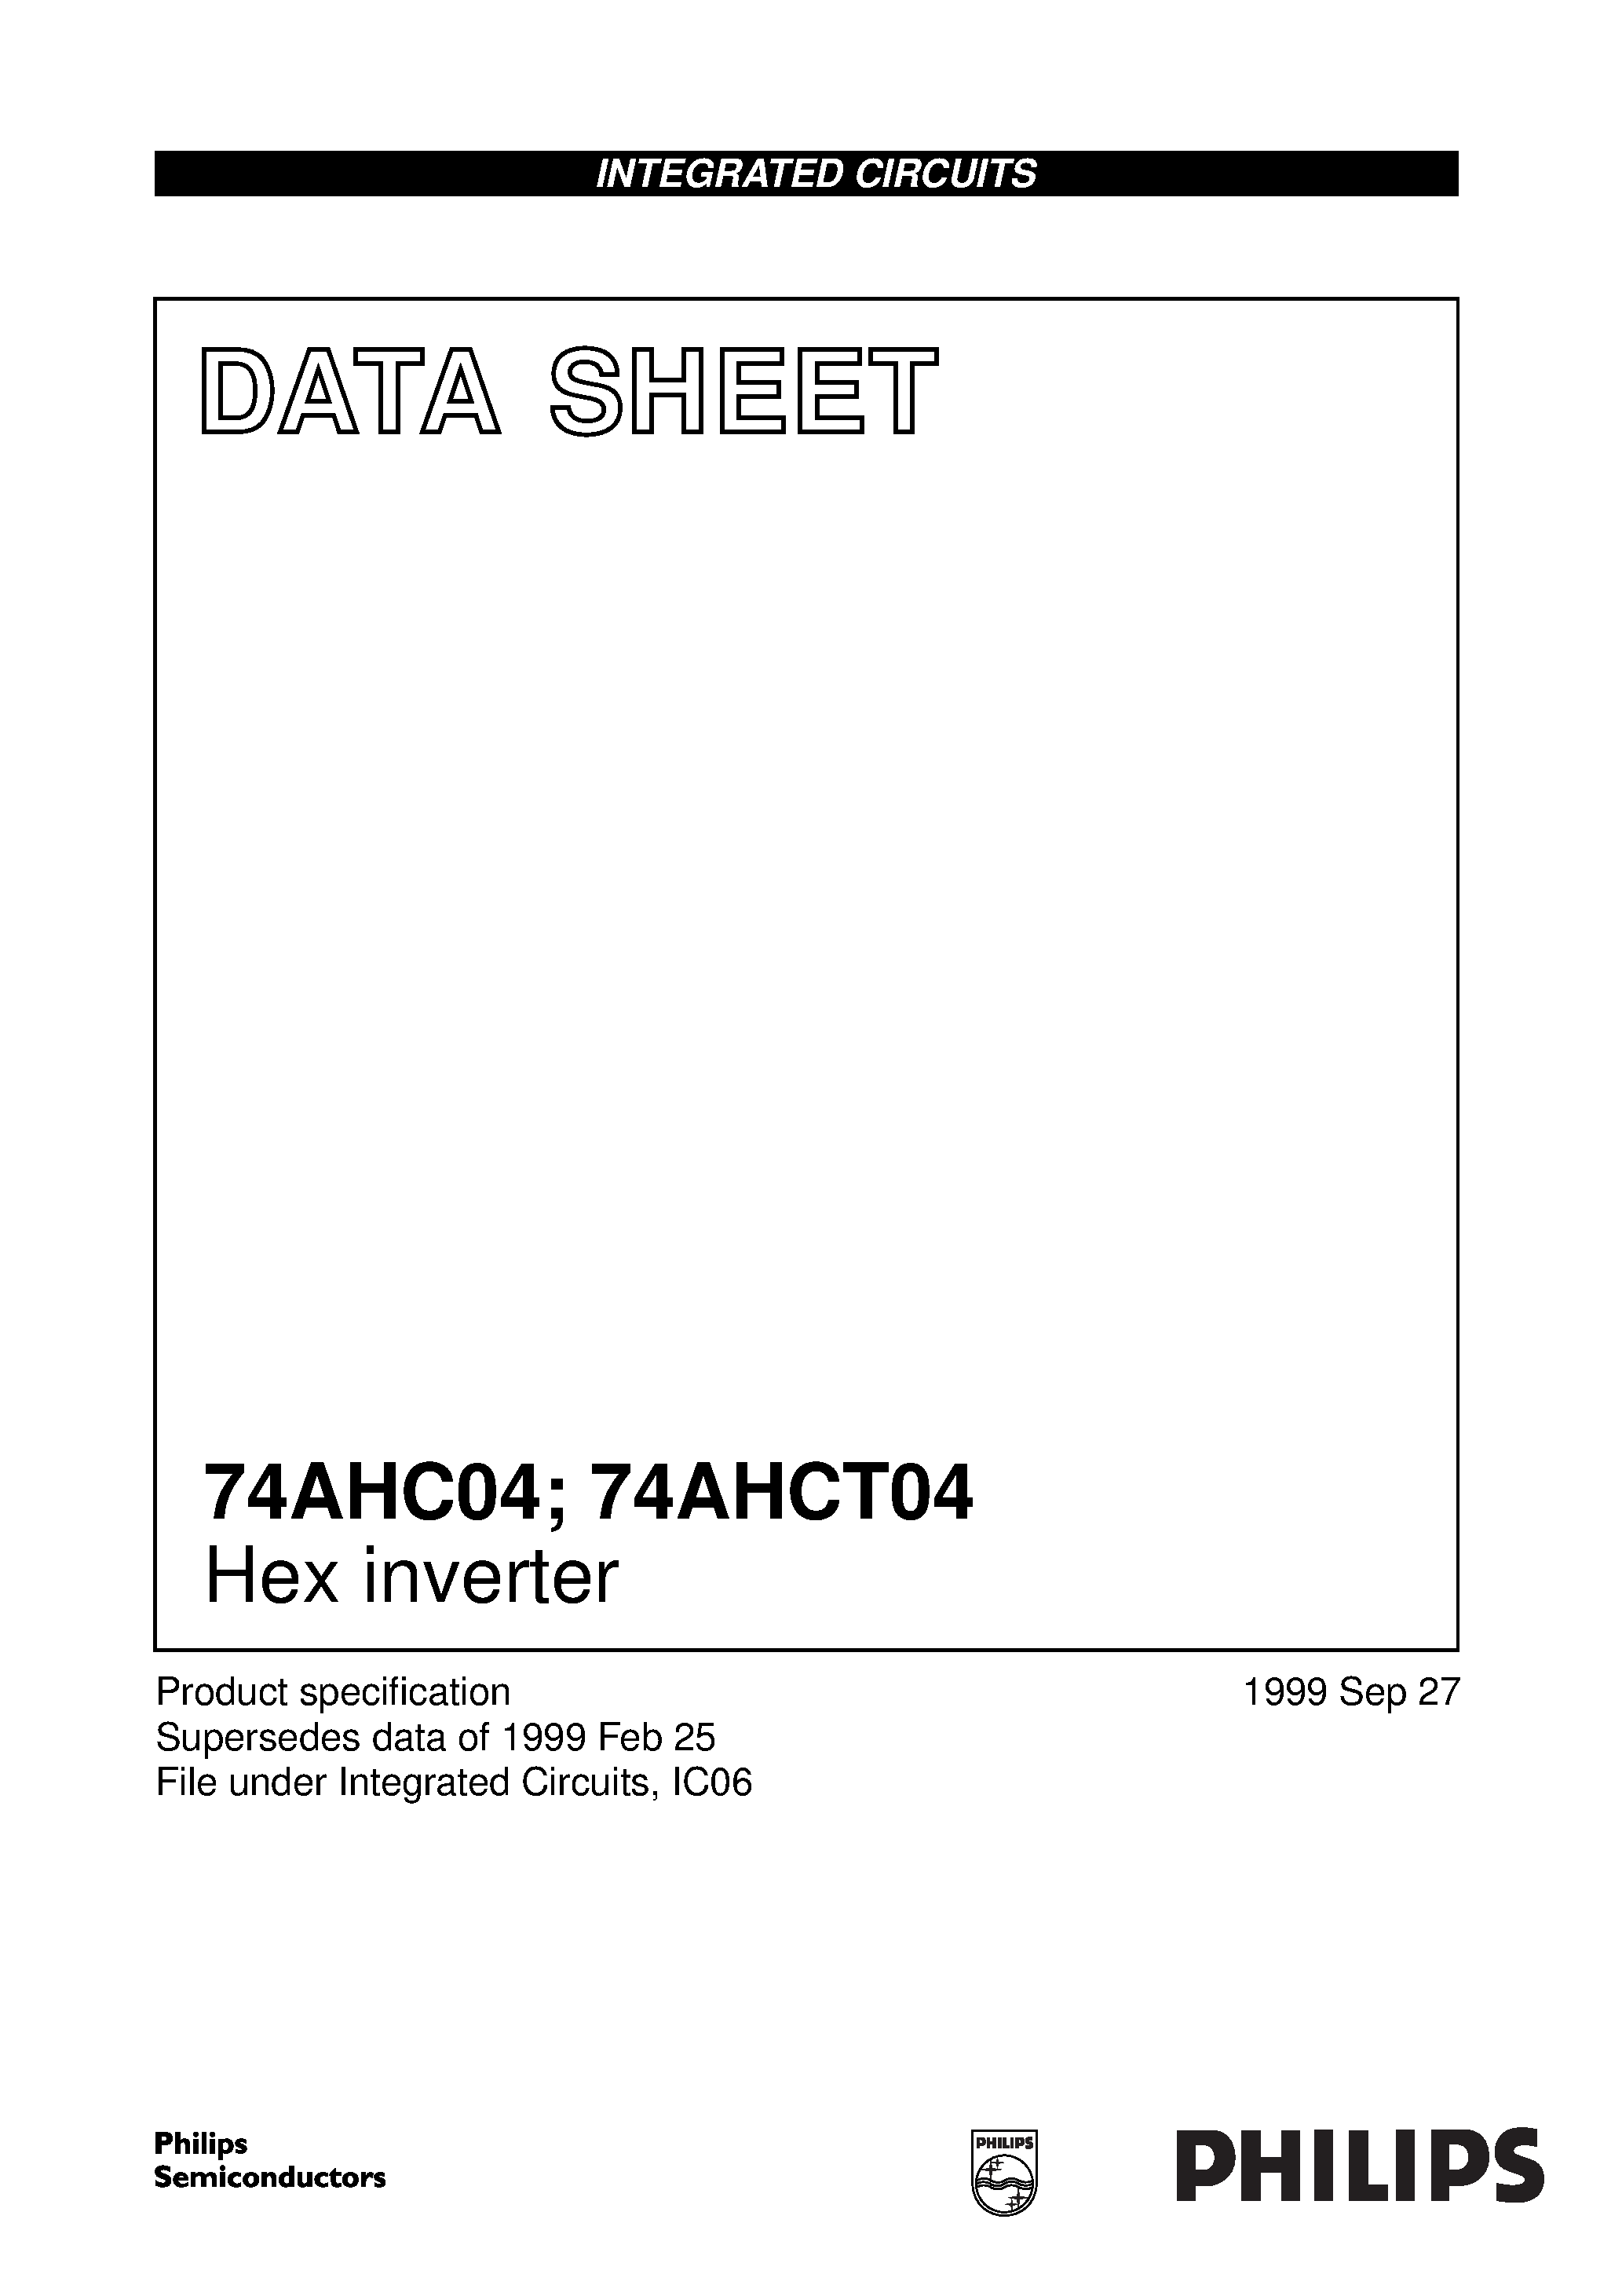 Даташит 74AHC04 - Hex inverter страница 1